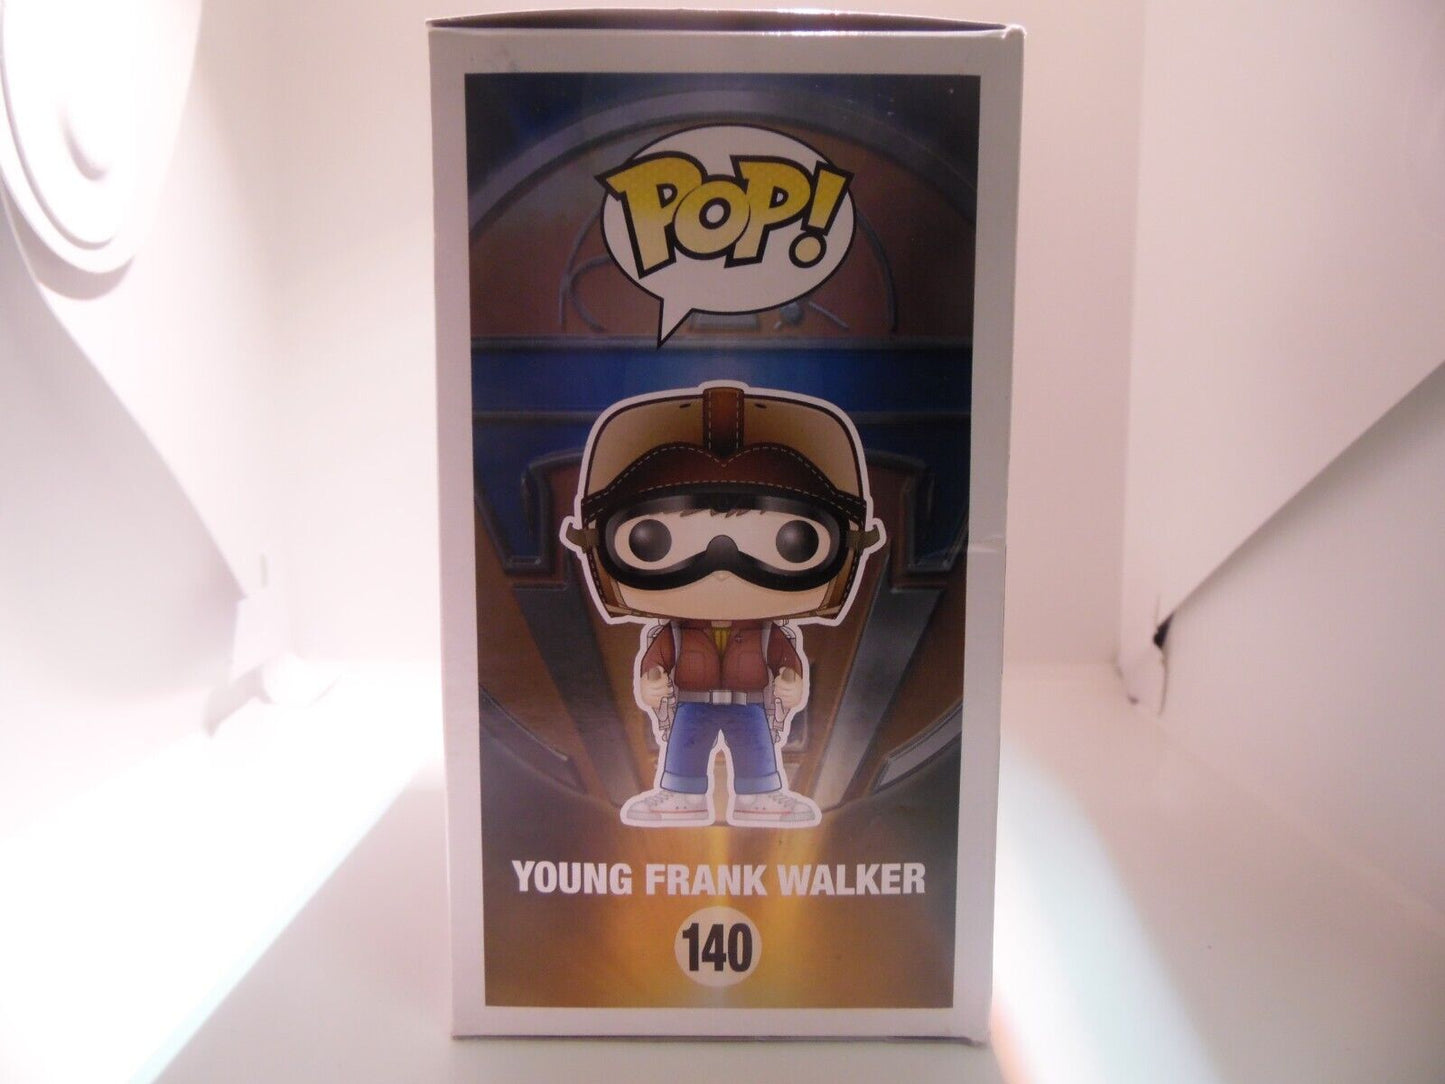 Funko Pop! Tomorrowland Young Frank Walker #140 Rare Vaulted Vinyl